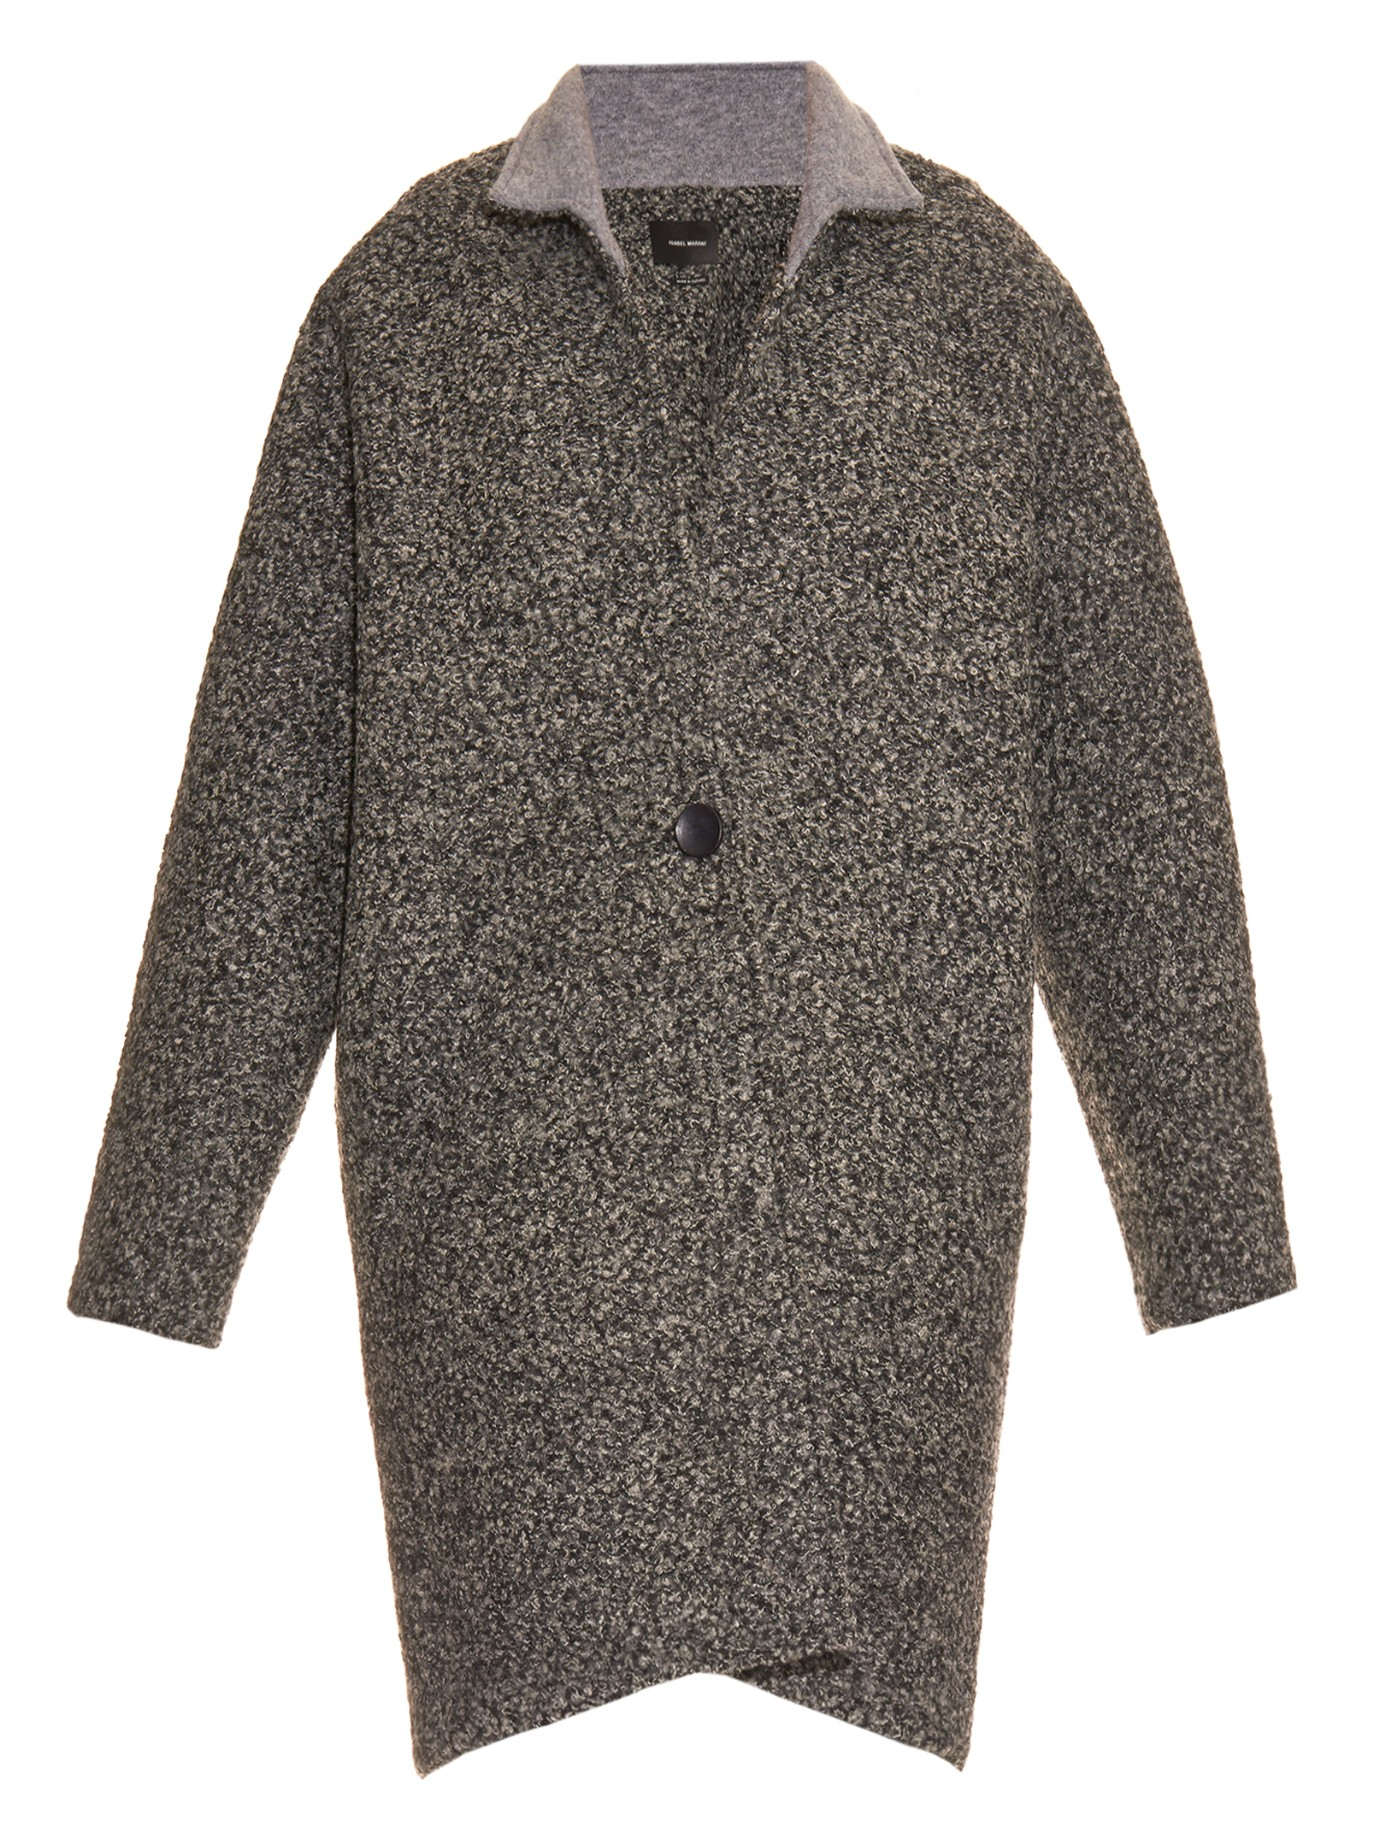 Isabel Marant Wool Daryl Oversized Bouclé Coat in Grey White (Gray) - Lyst